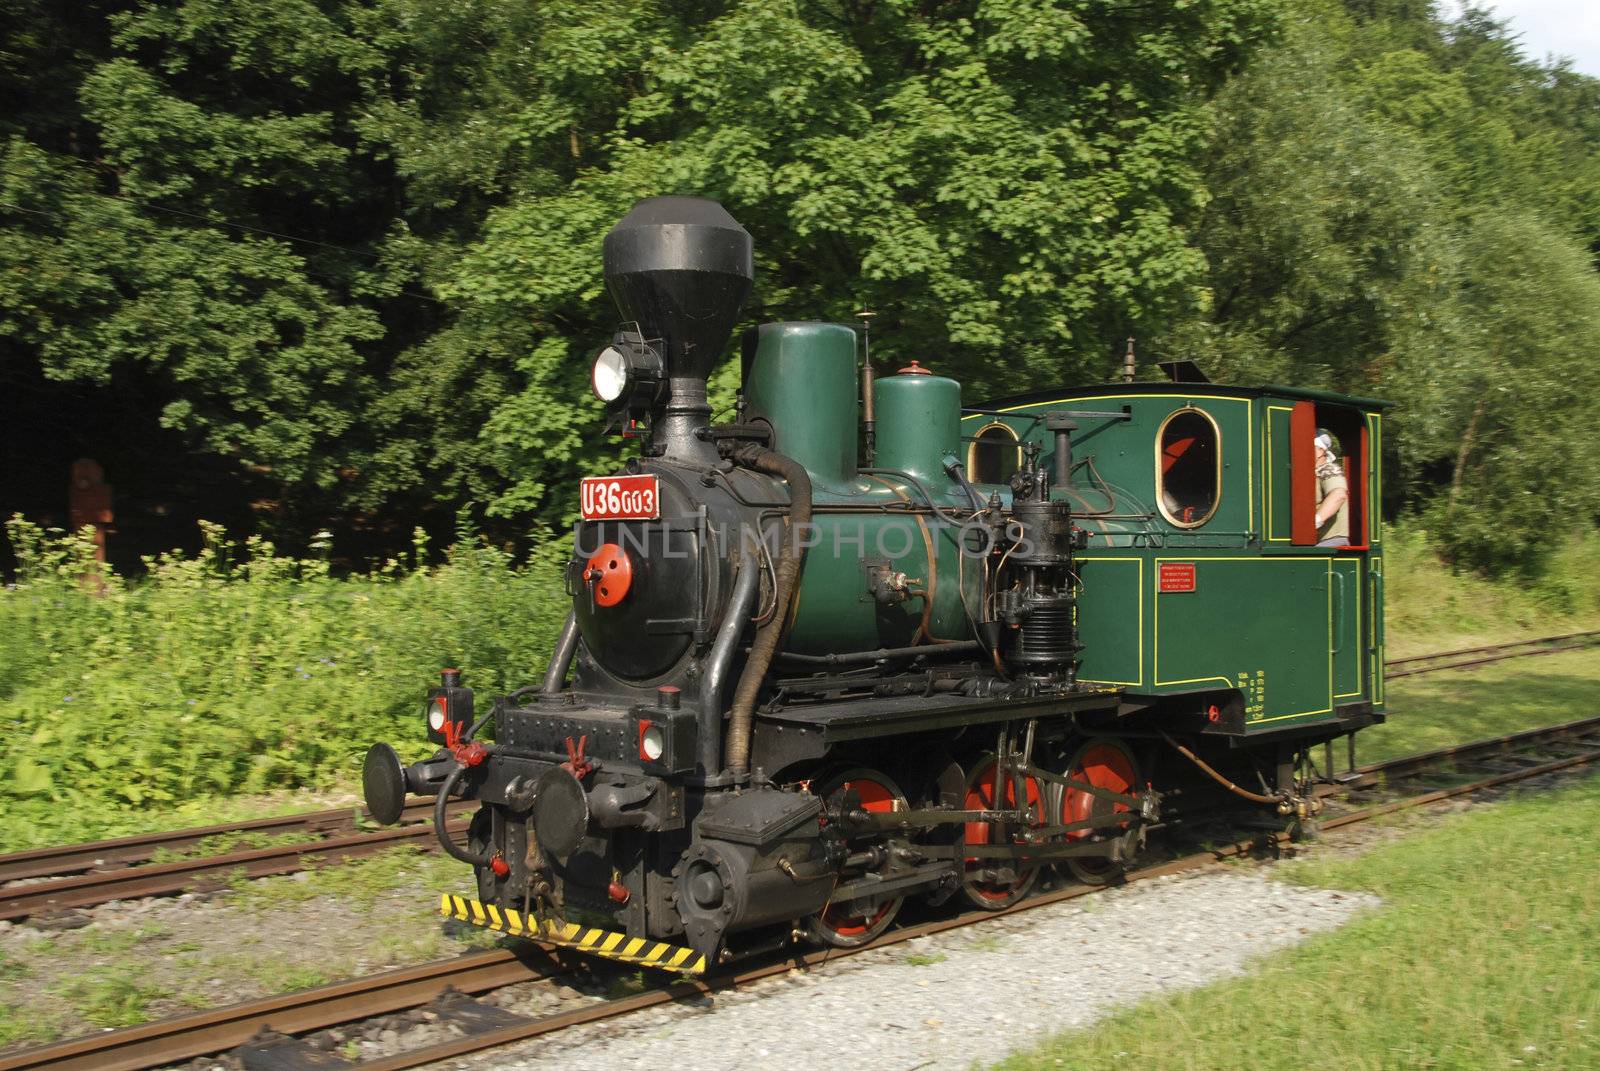 Ancient steam locomotive on a vintage railroad